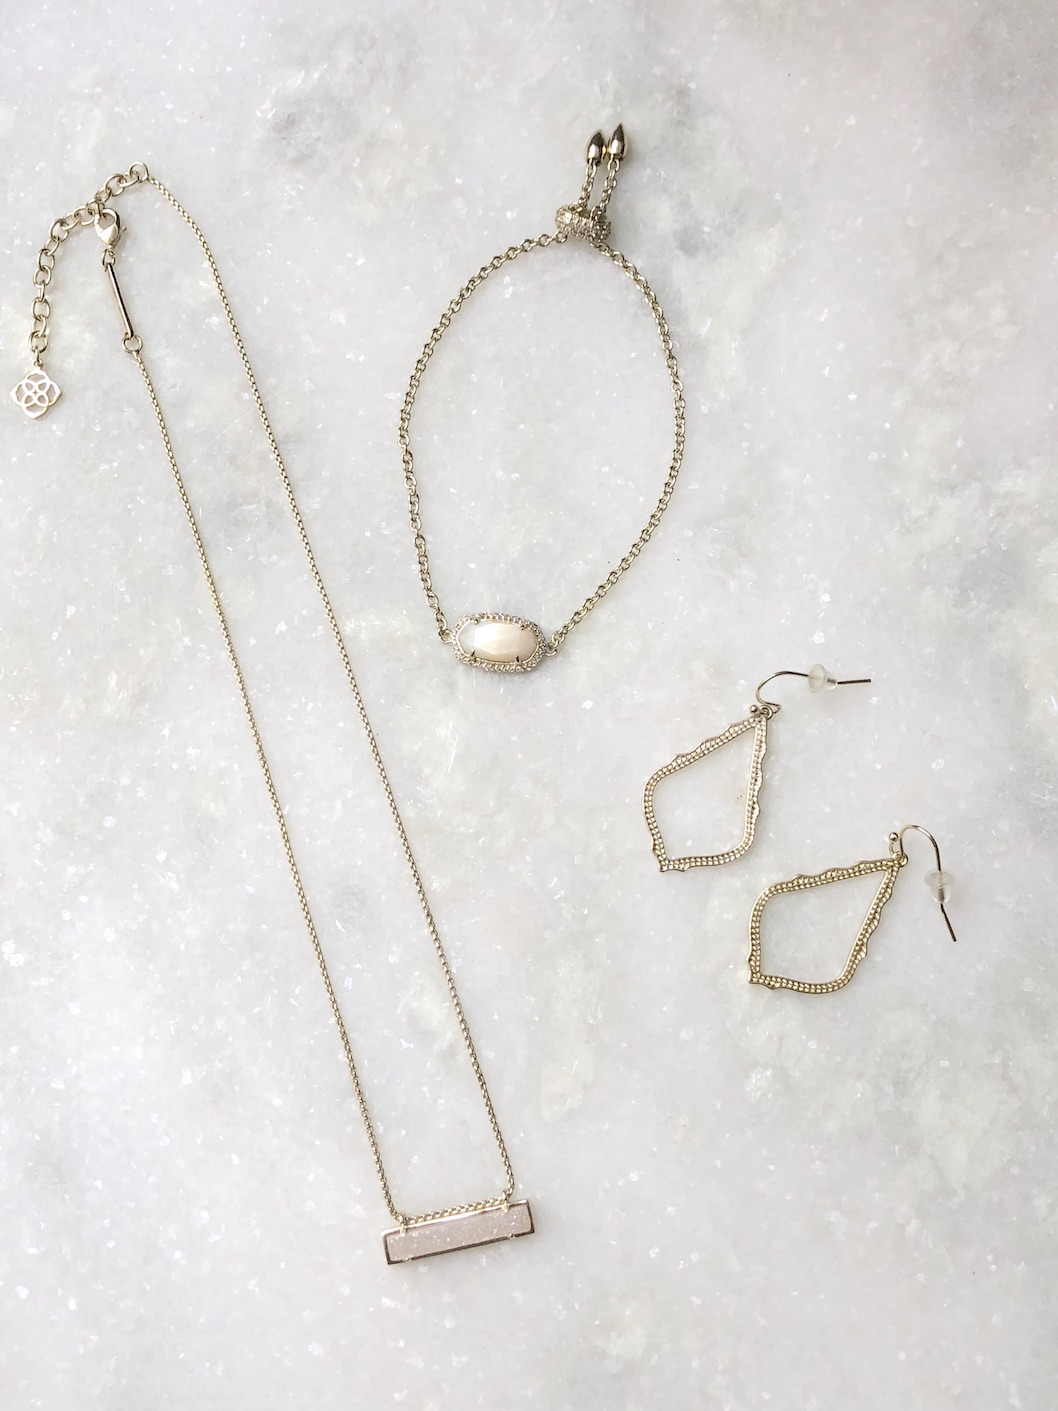 Favorite Timeless Jewelry Accessories - Kendra Scott 4